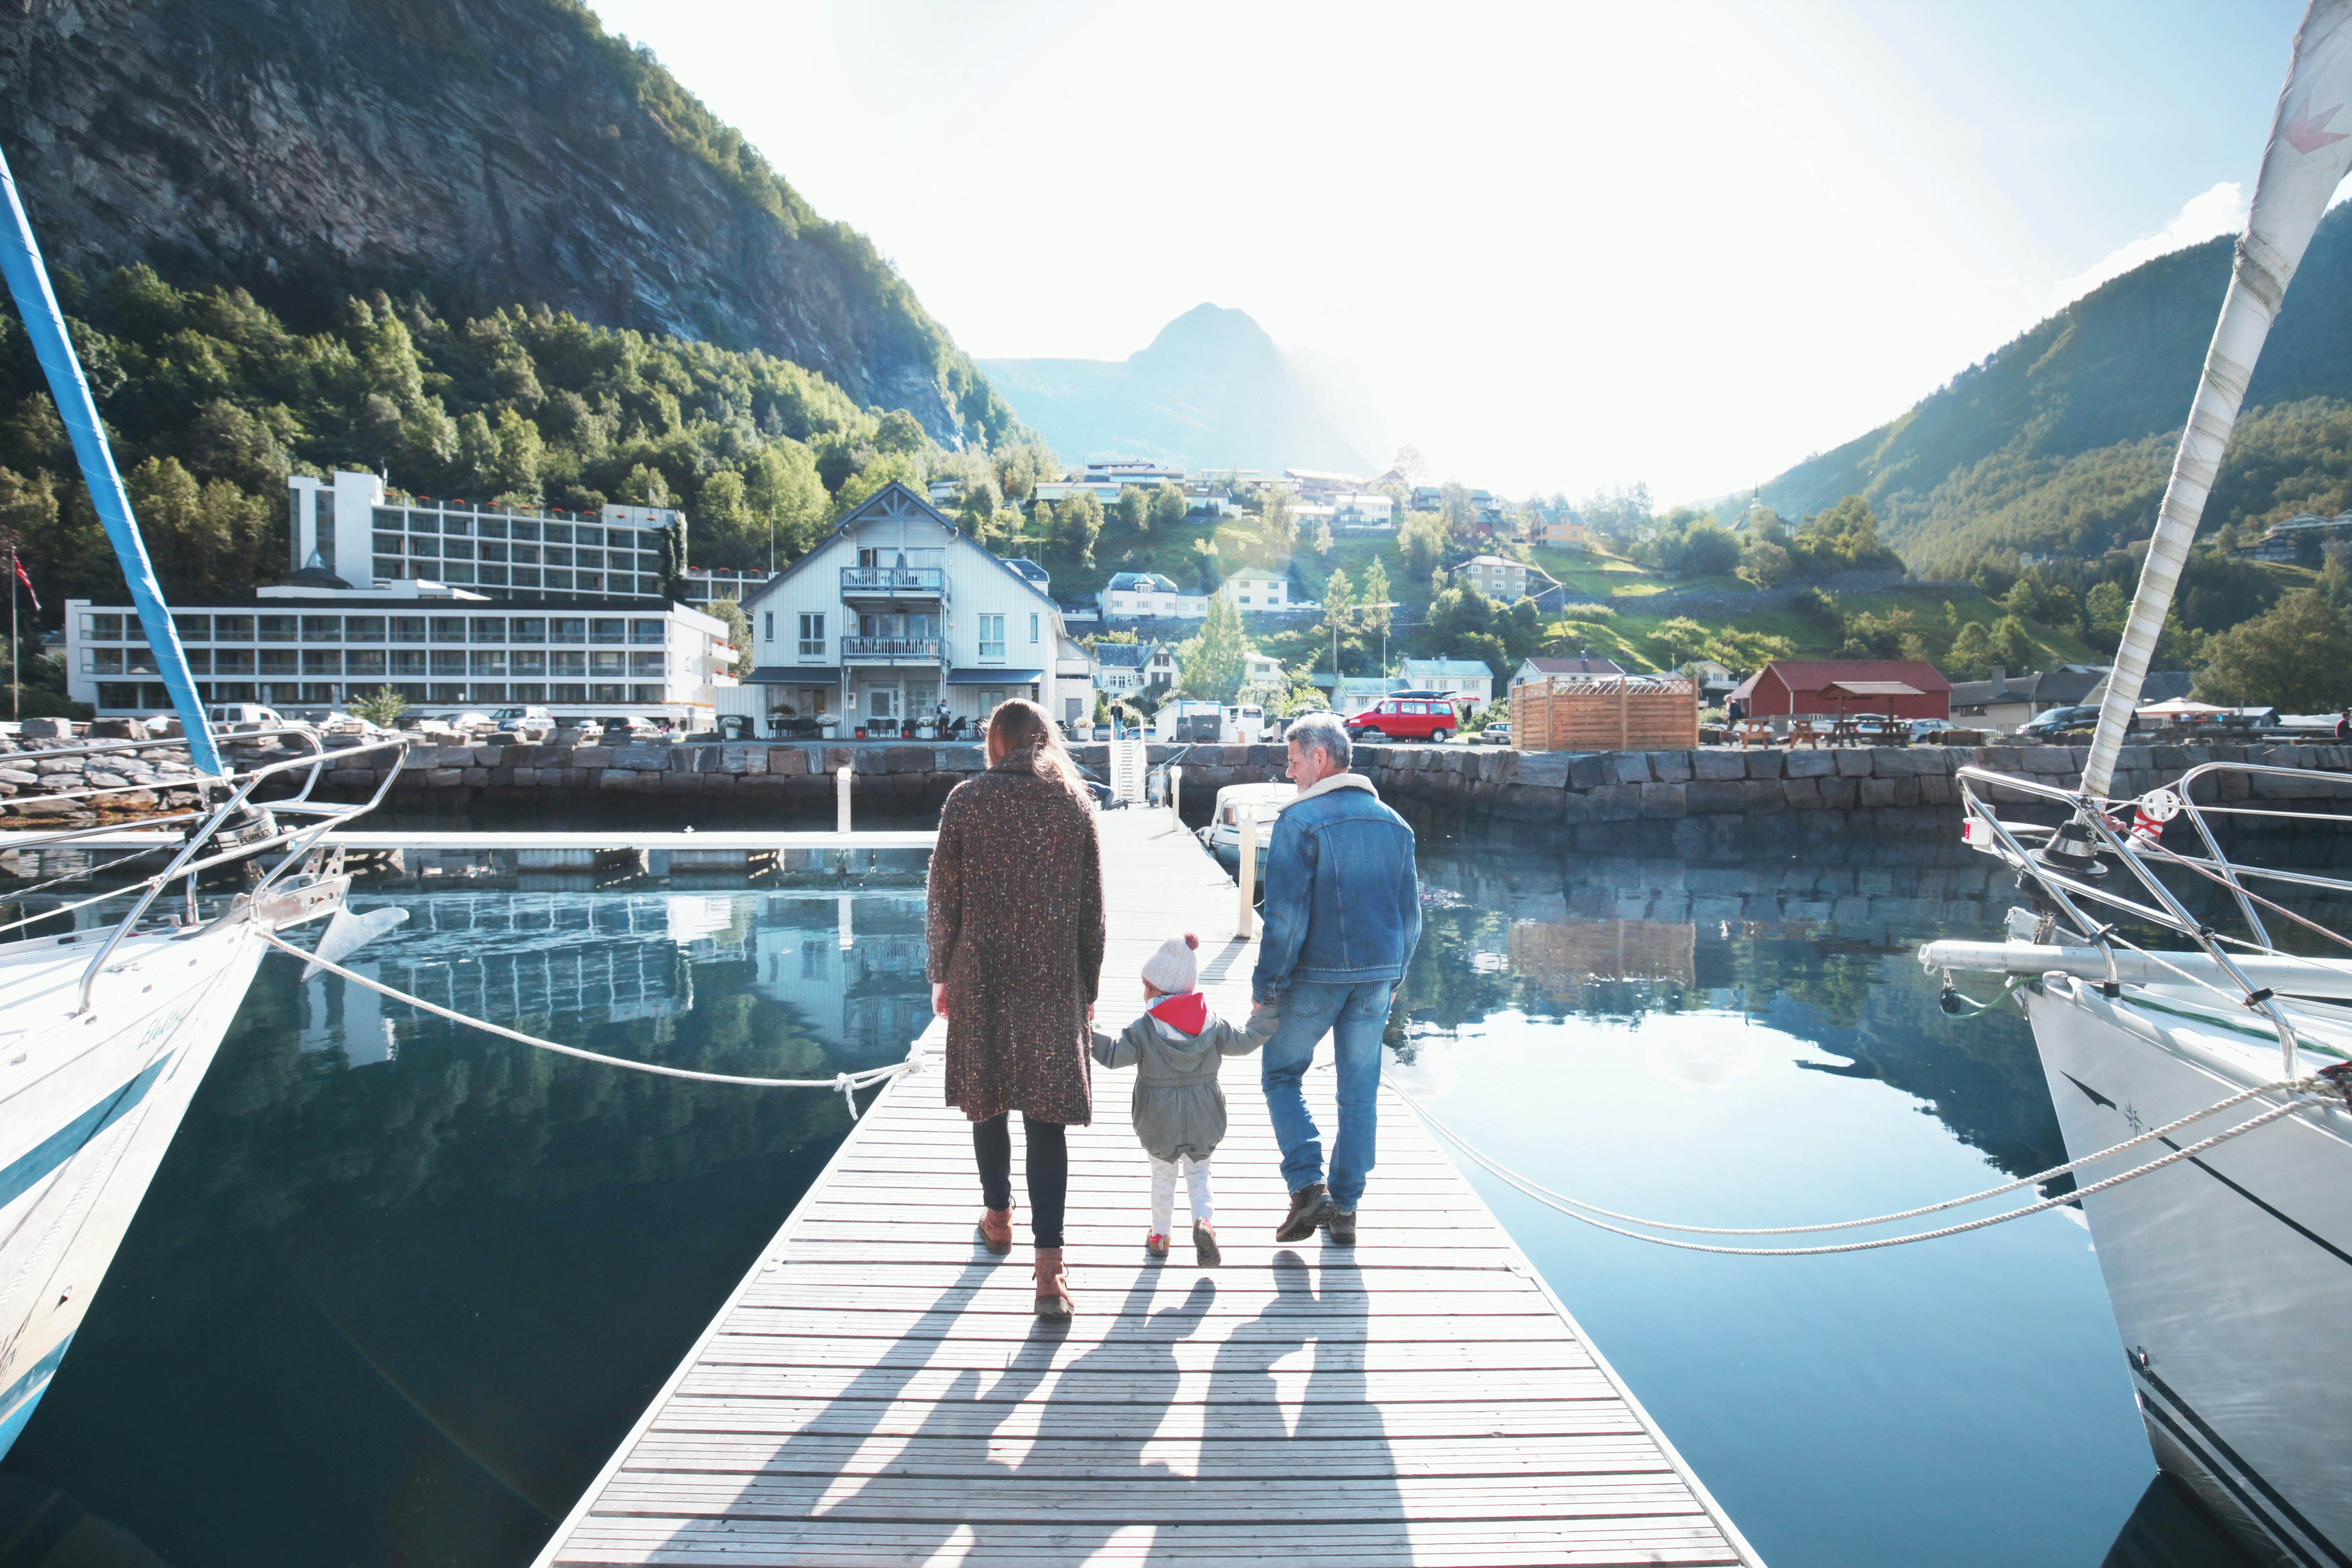 Norway travel guide Lonely Planet - Norvégia útikönyv - A Lu